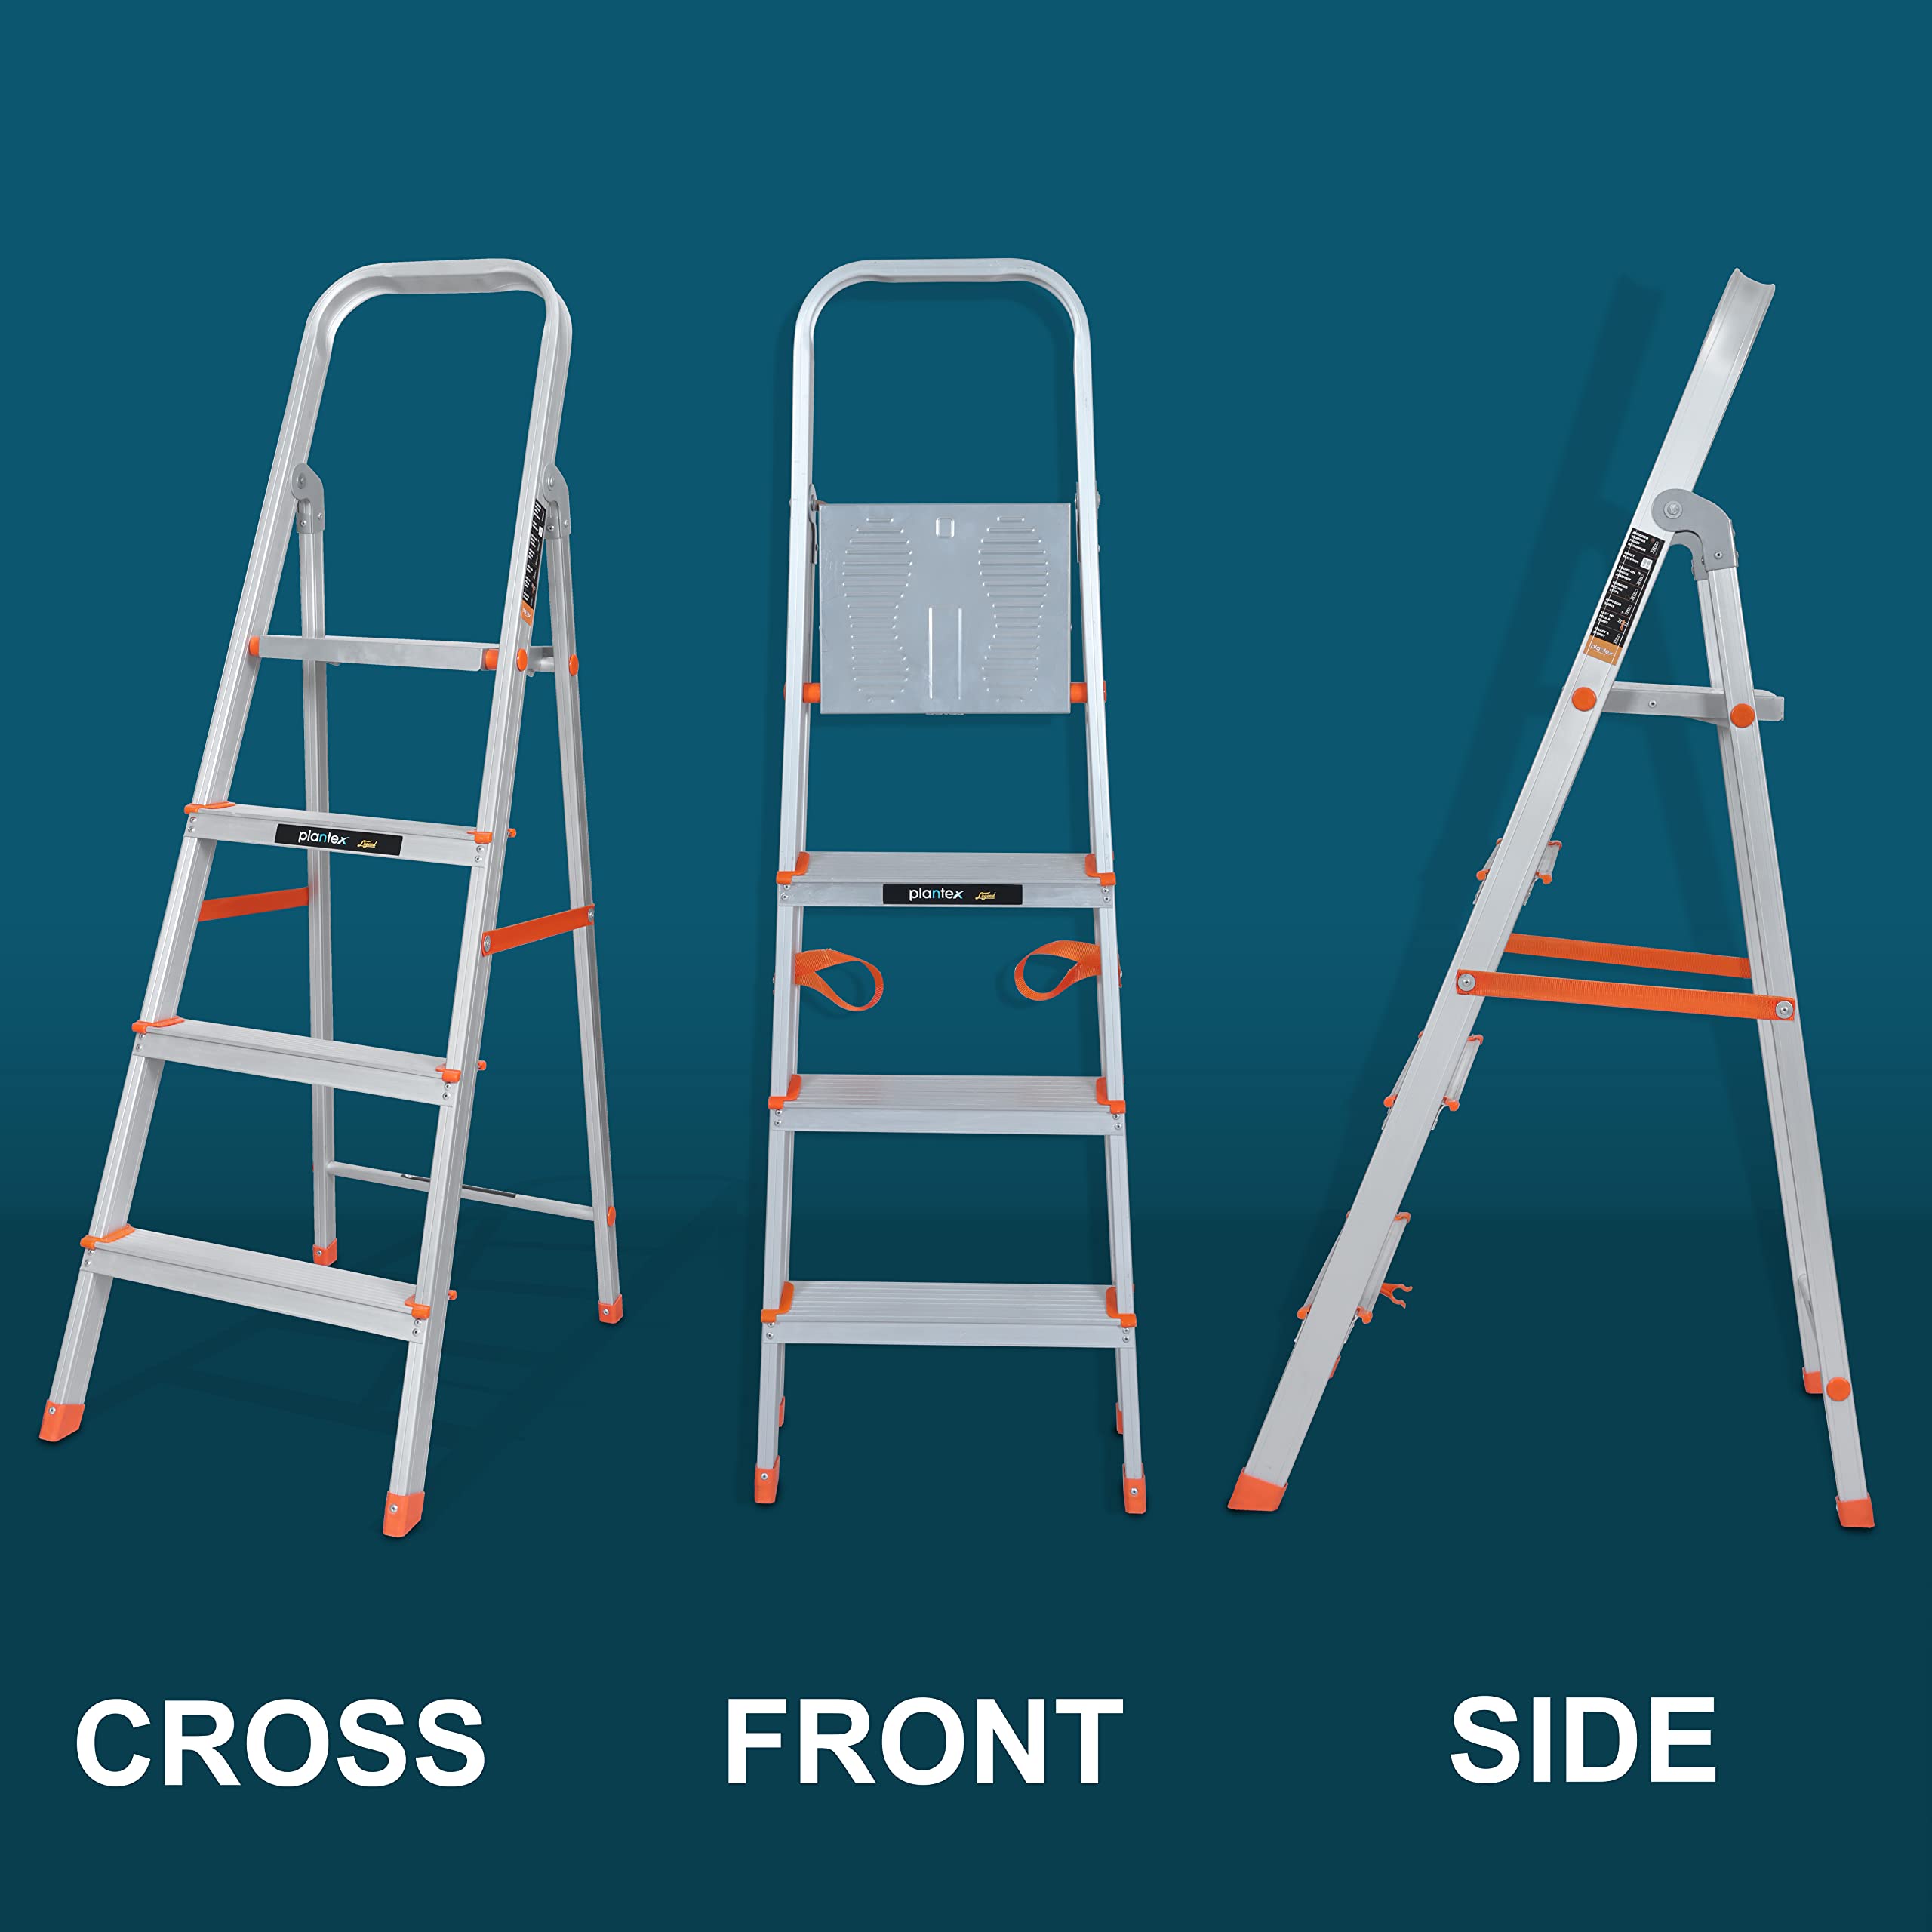 Plantex Legend Aluminium Folding 4 Step Ladder for Home - 4 Wide Step Ladder (Orange-Silver)